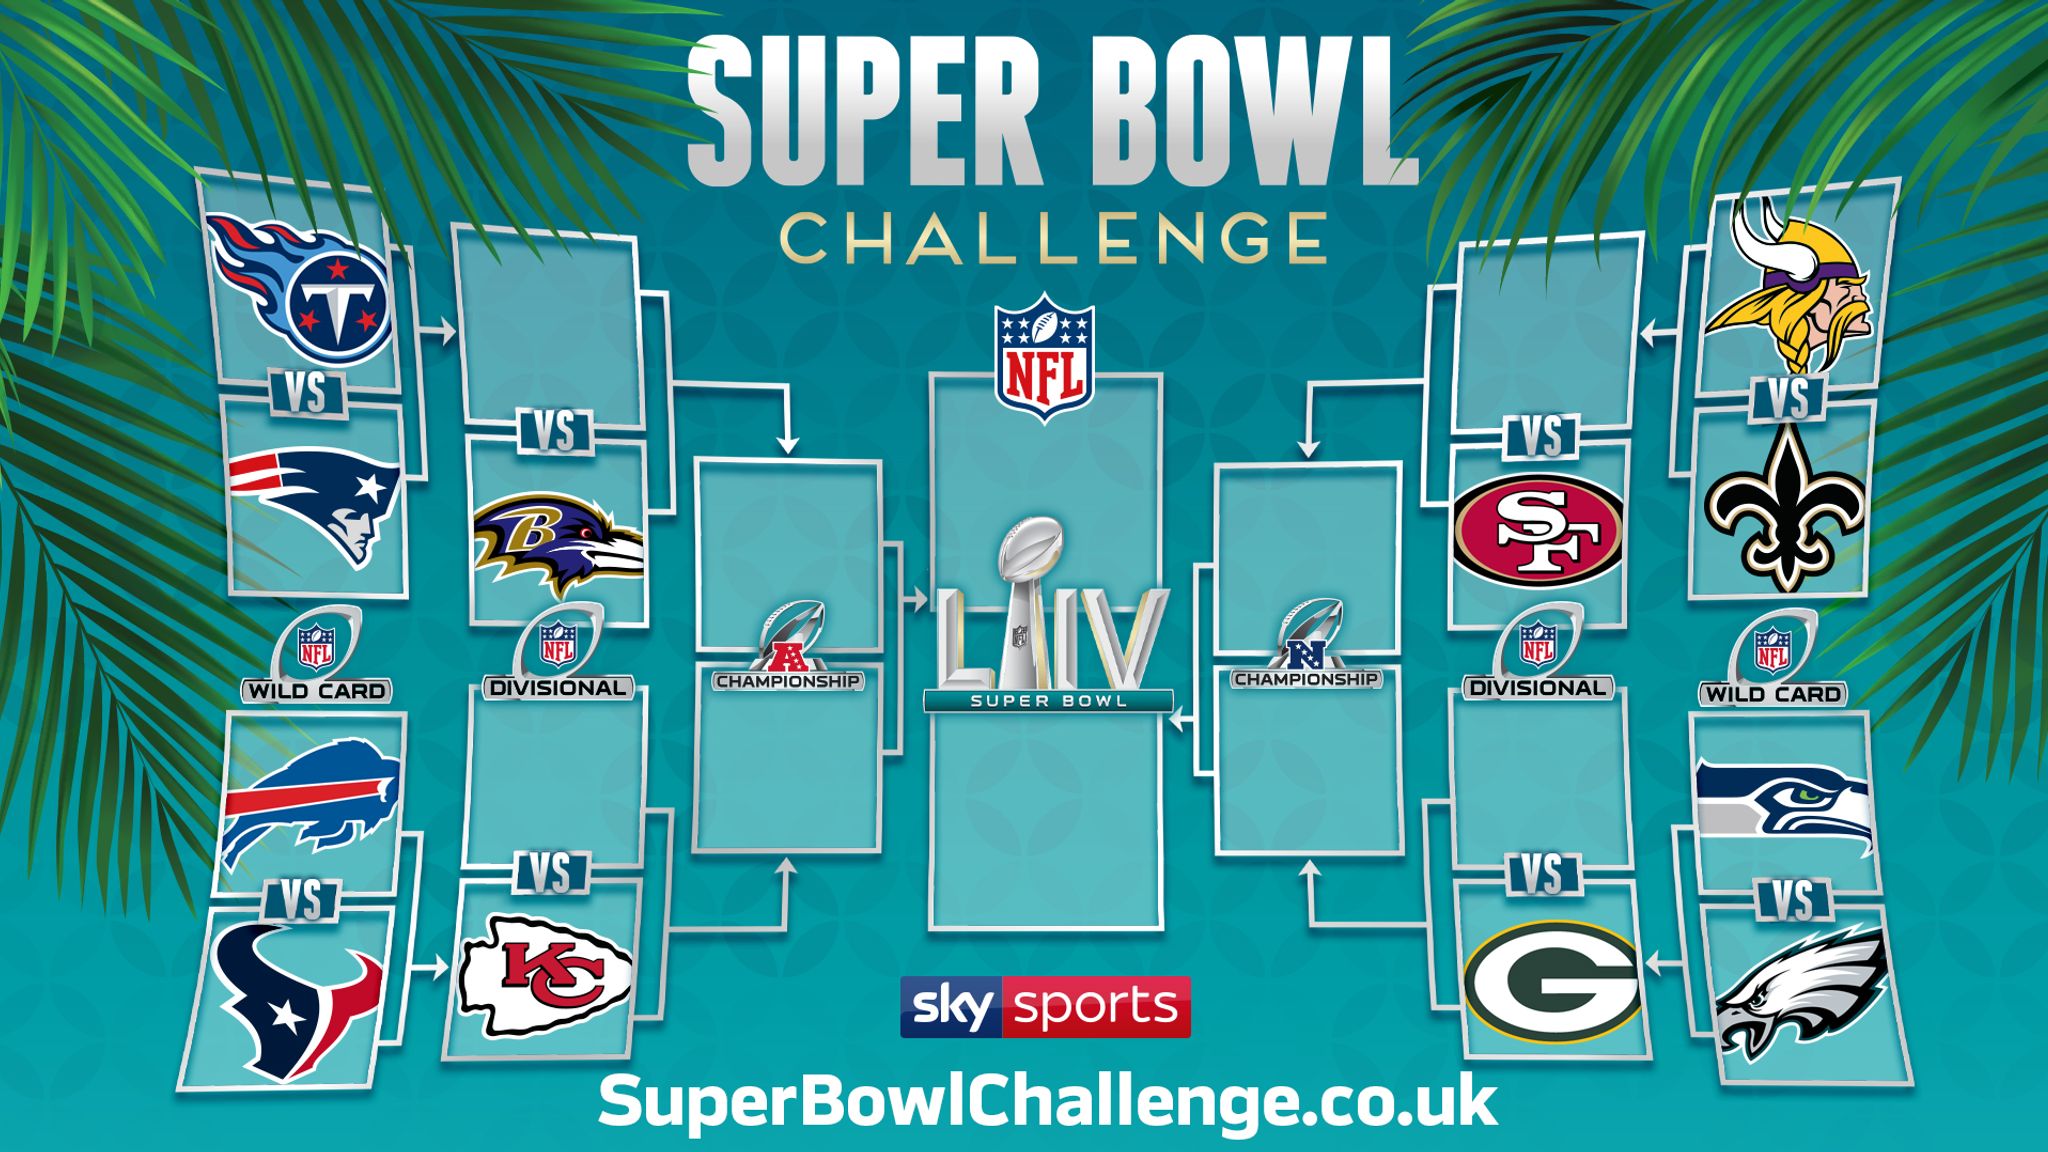 Super Bowl Challenge: Register and pick your bracket for the NFL